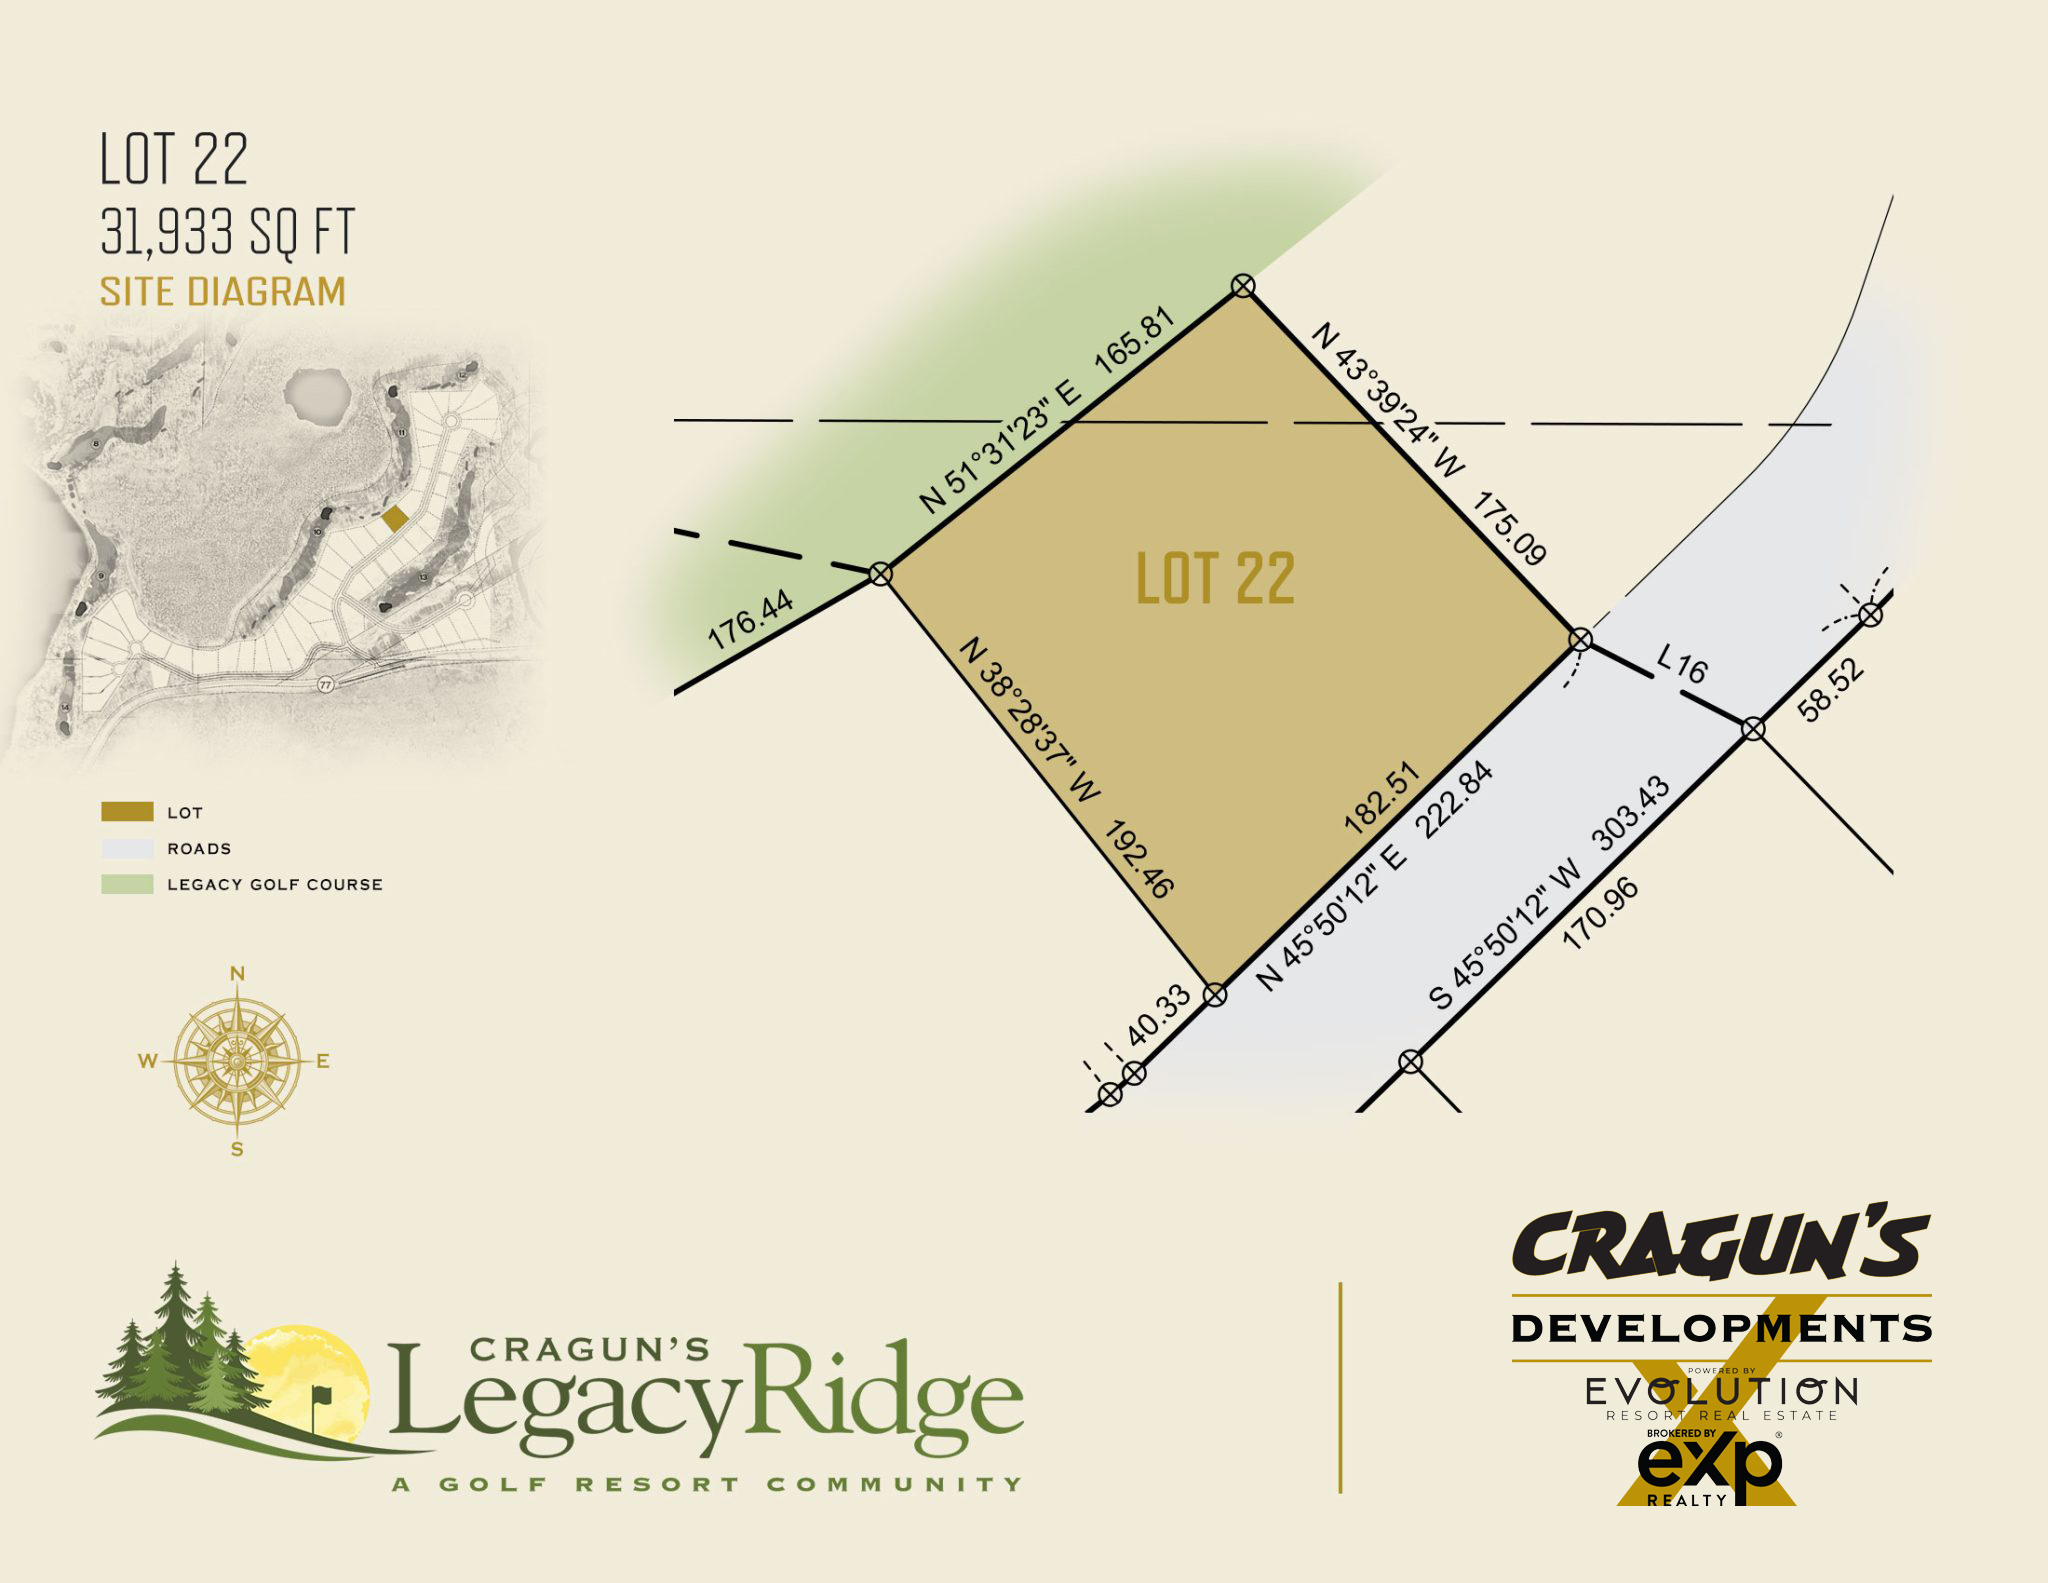 Legacy Ridge Lot 22 at Cragun's Developments in Brainerd, MN